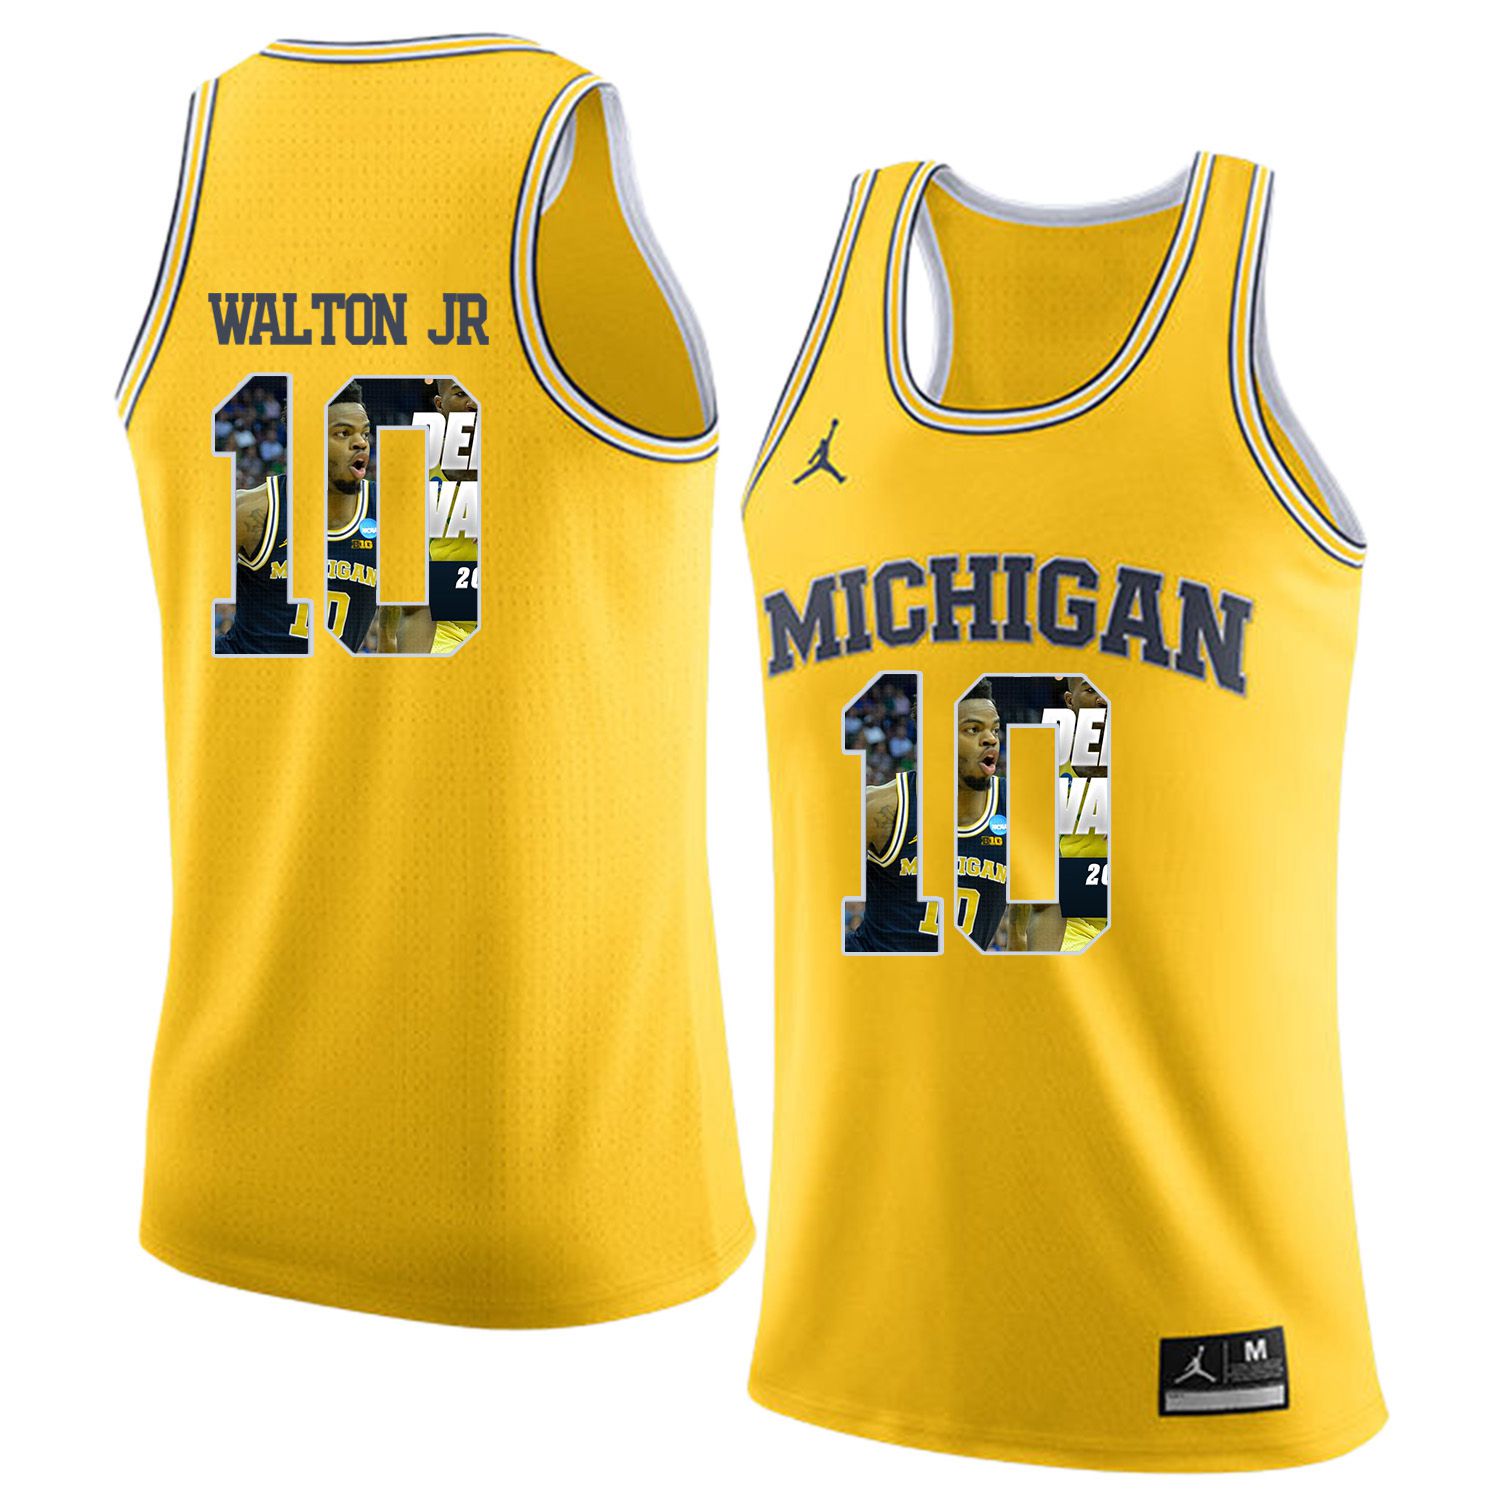 Men Jordan University of Michigan Basketball Yellow 10 walton Fashion Edition Customized NCAA Jerseys